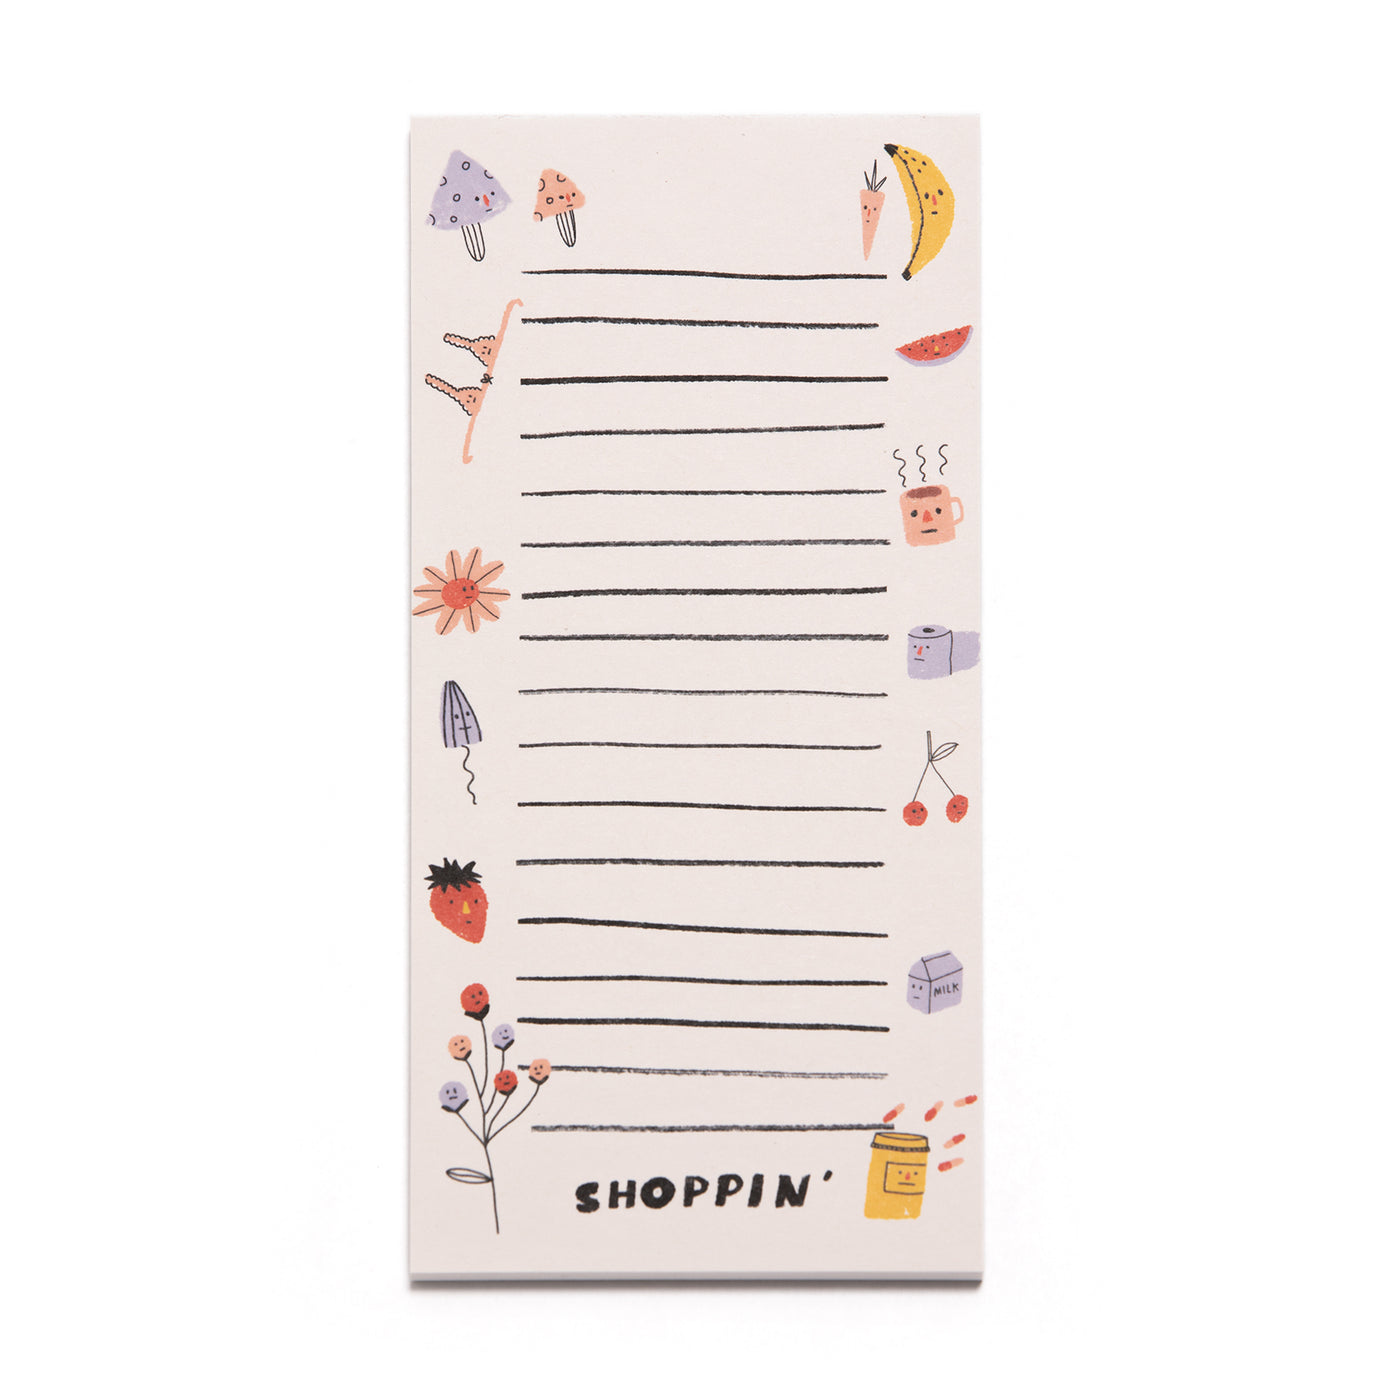 SHOPPIN' - Market Note Pad